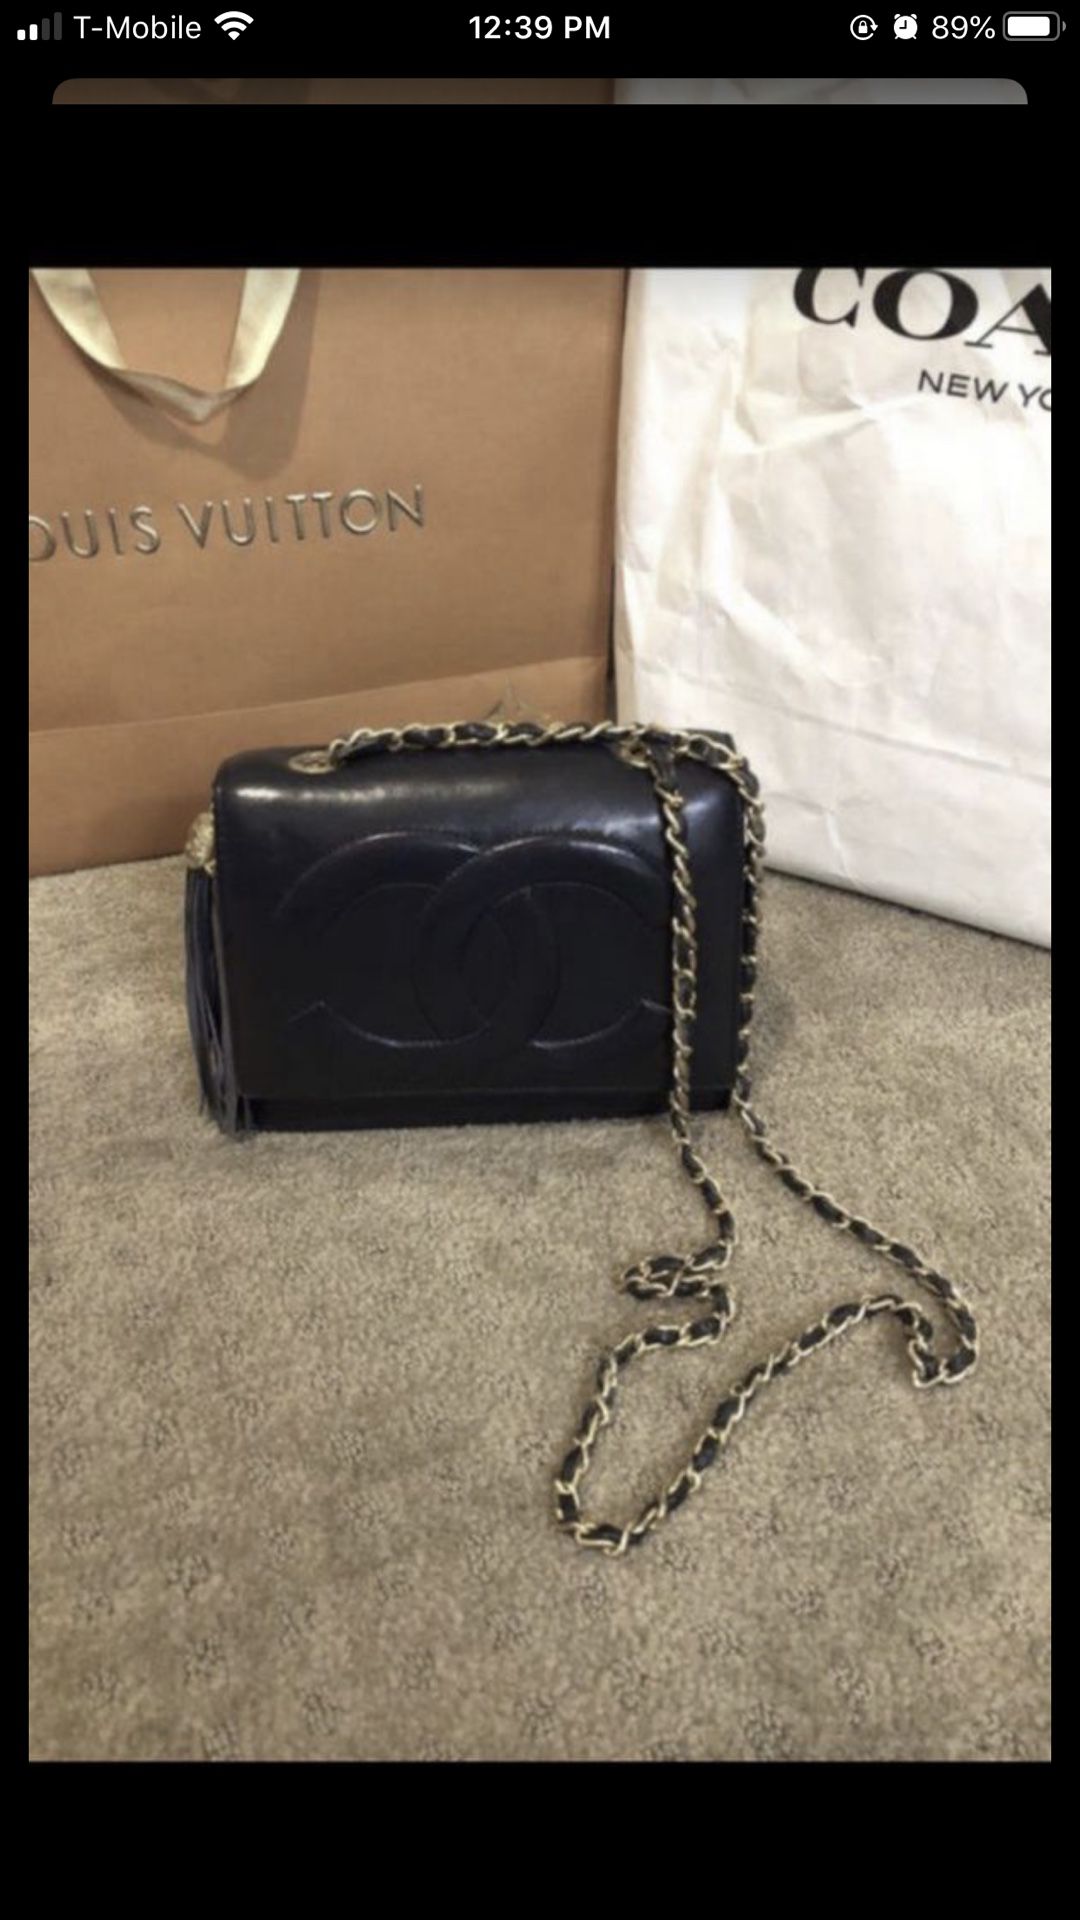 Chanel purse